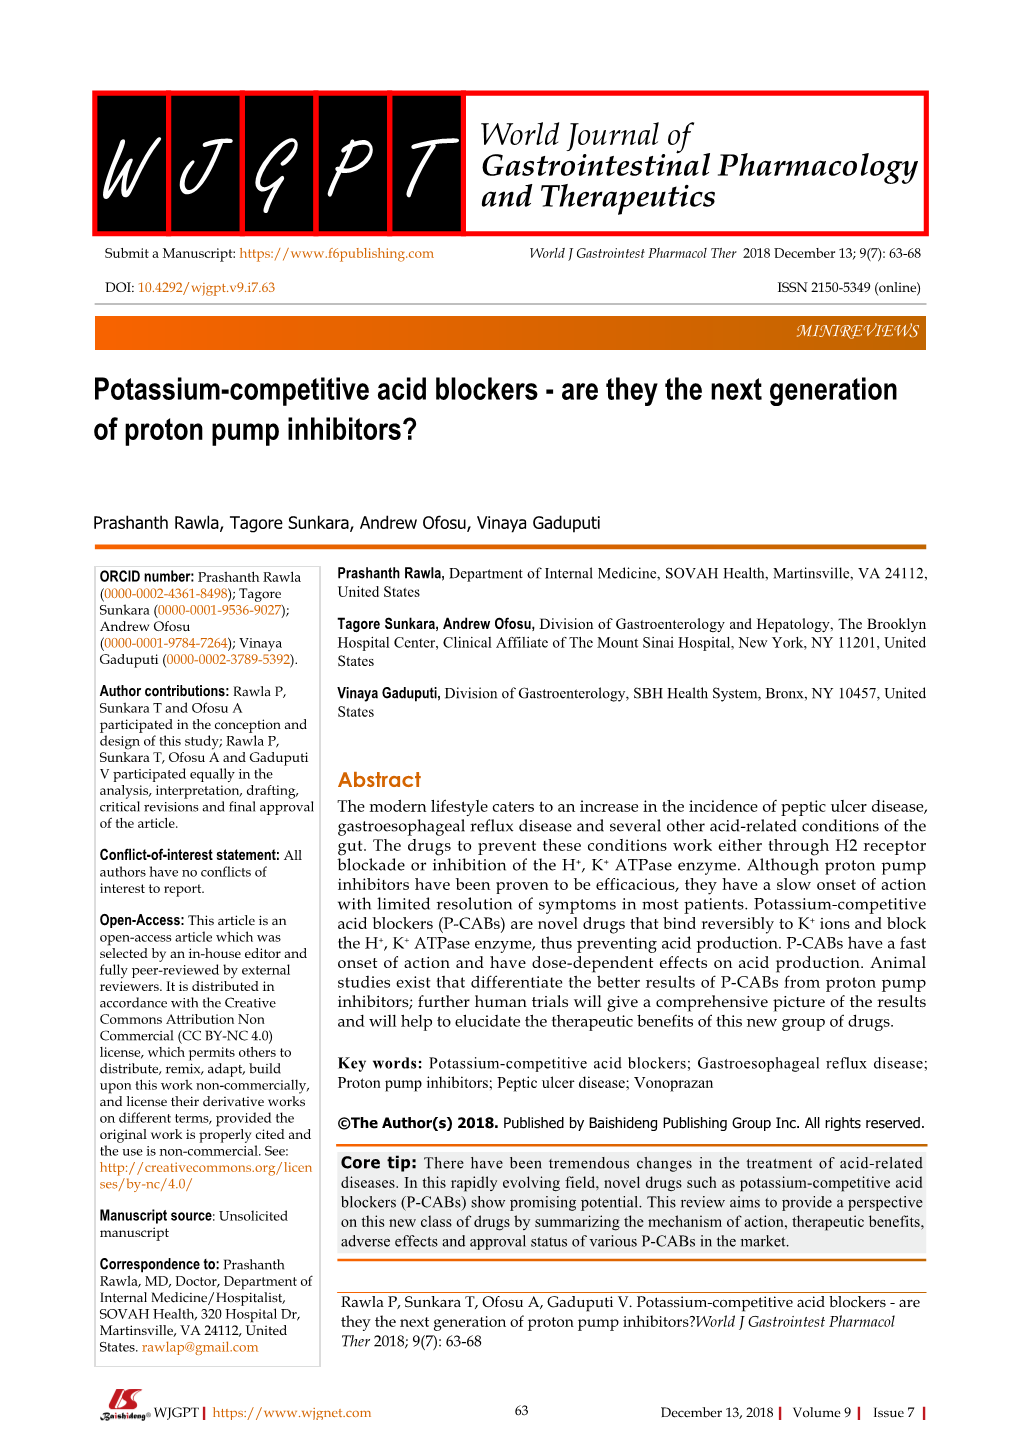 Potassium-Competitive Acid Blockers - Are They the Next Generation of Proton Pump Inhibitors?